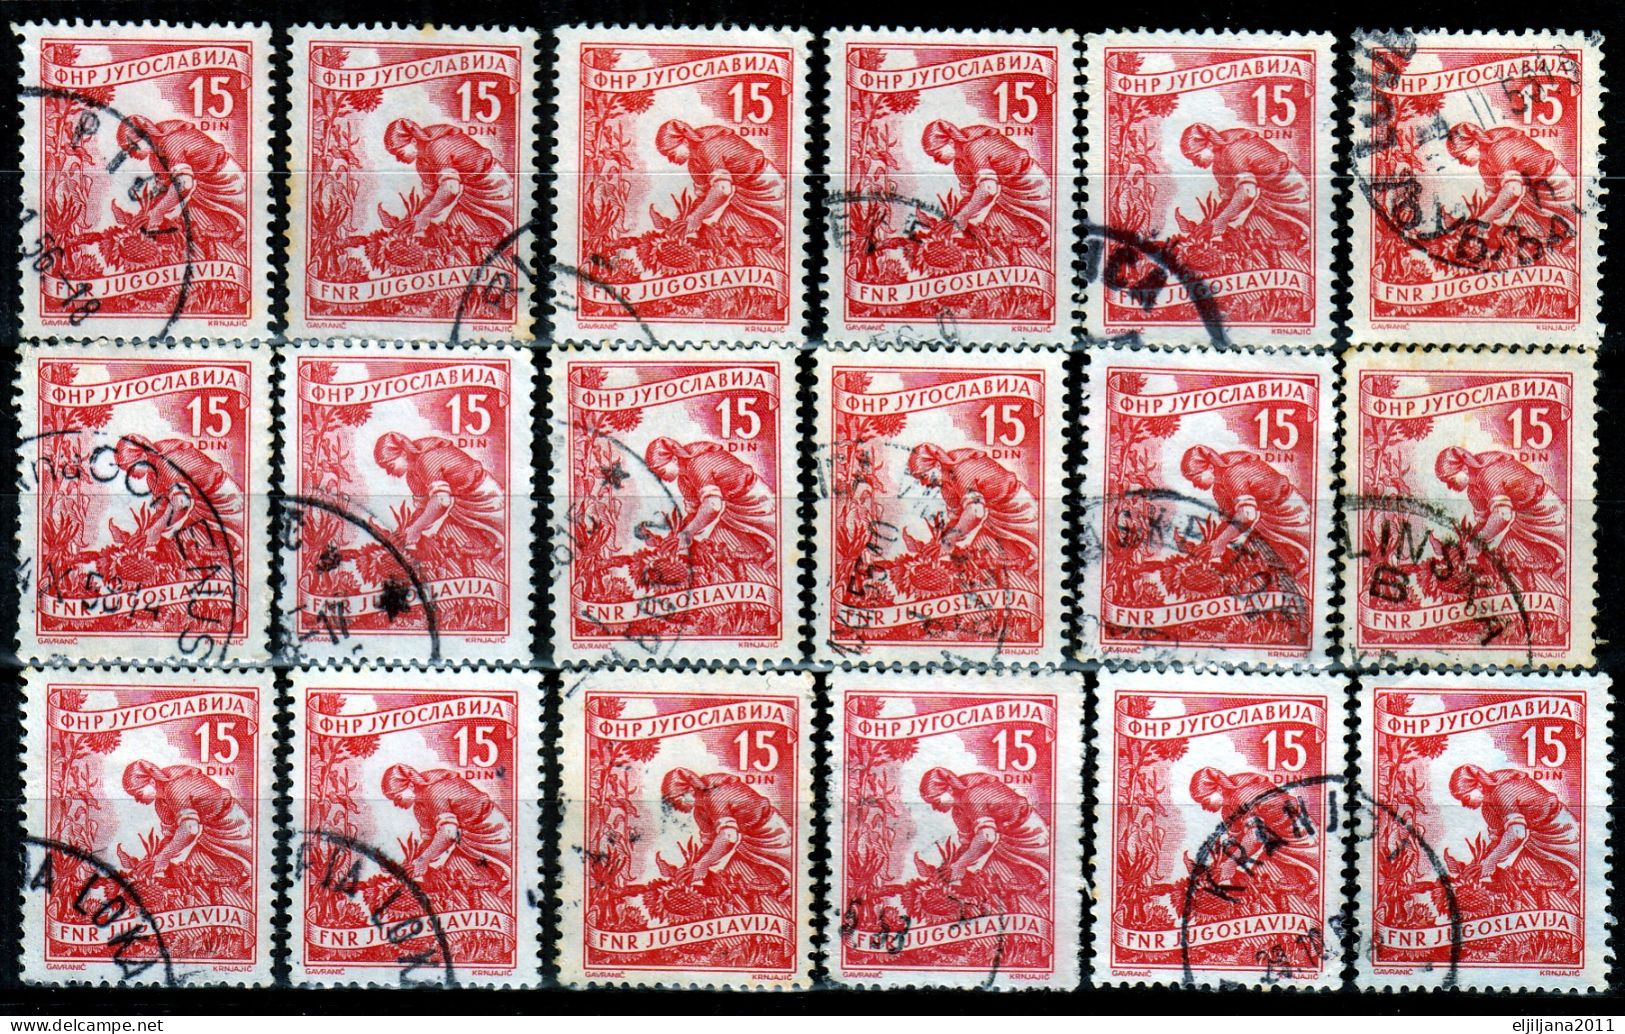 ⁕ Yugoslavia 1952 ⁕ Local economy Mi.723 ⁕ 51v used Type I. 15v & Type II, shades, some nice postmark & errors- see scan